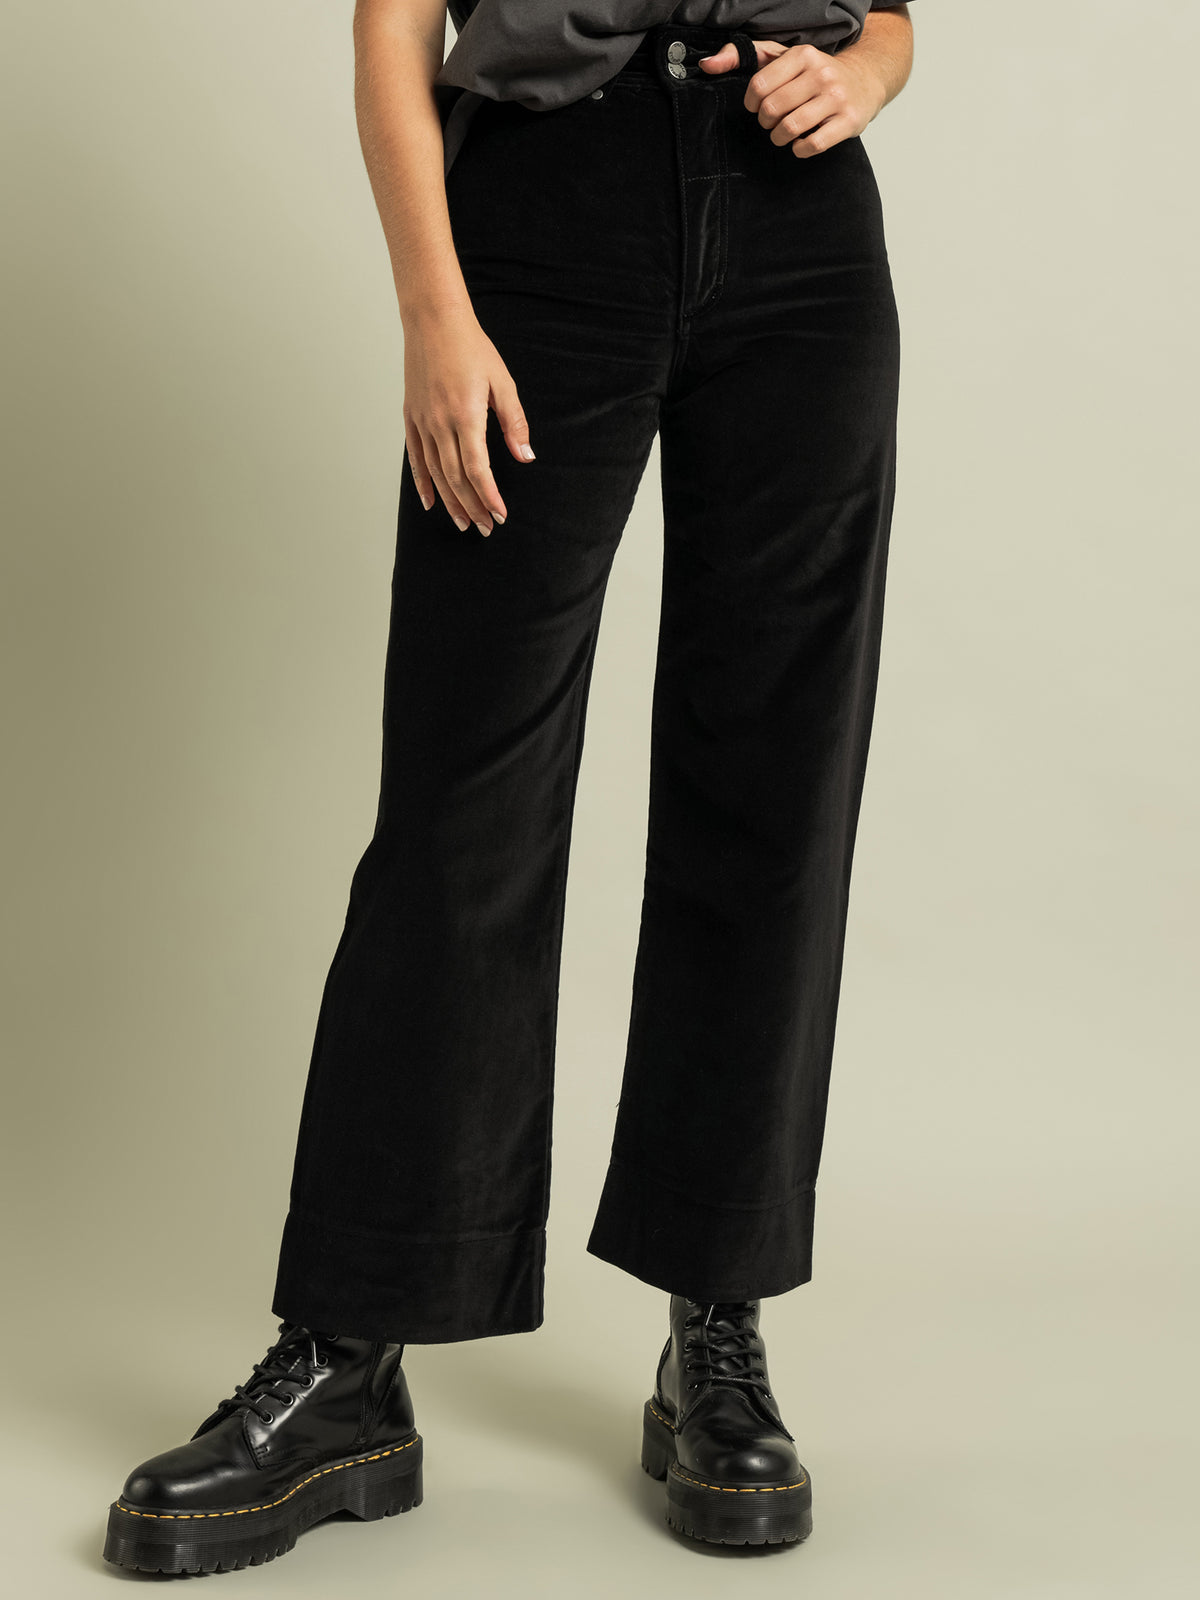 Bonnie Velvet Pants in Black